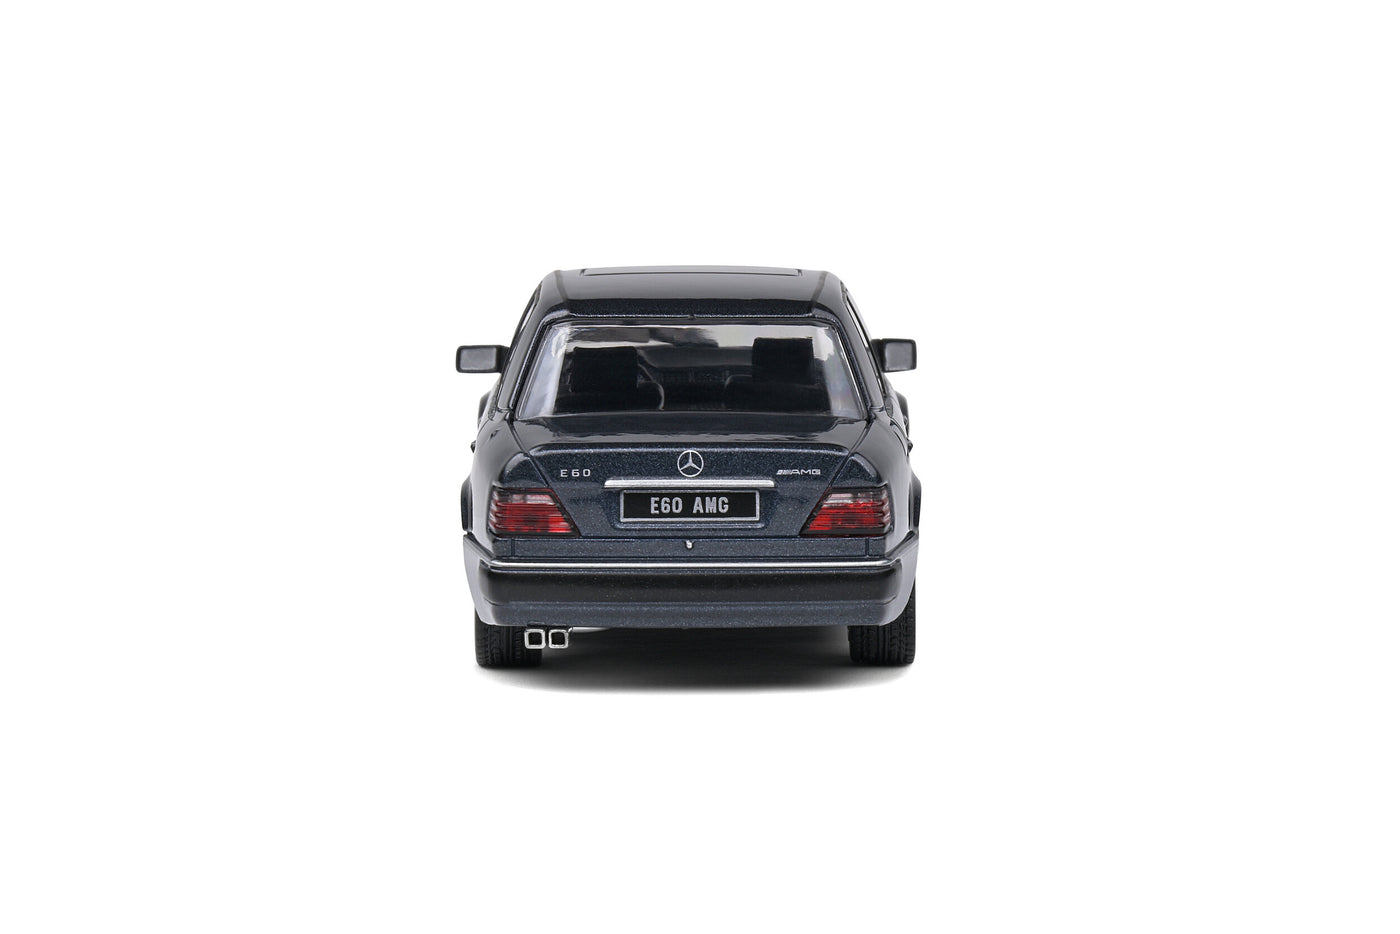 1990 Mercedes-Benz 190 Evo II W201 Black 1:18 - Diecast Scale Model | Solido